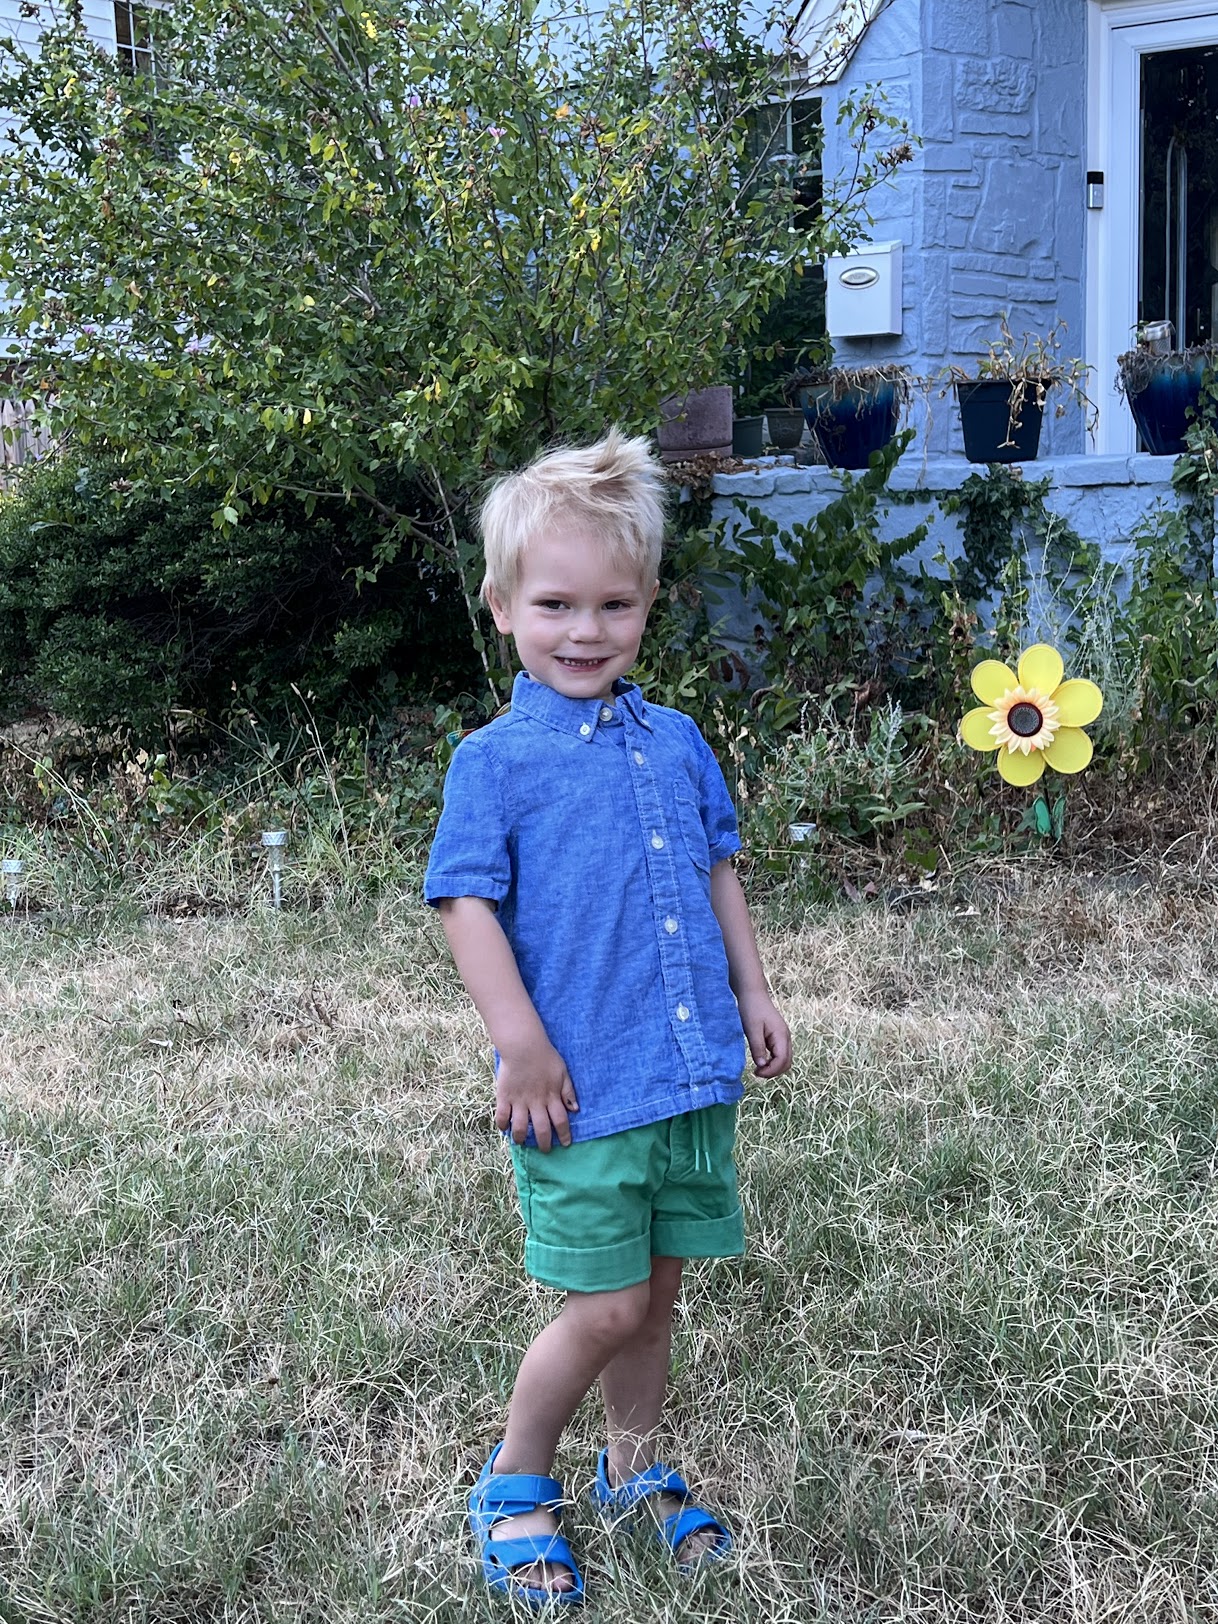 a boy standing in a yard